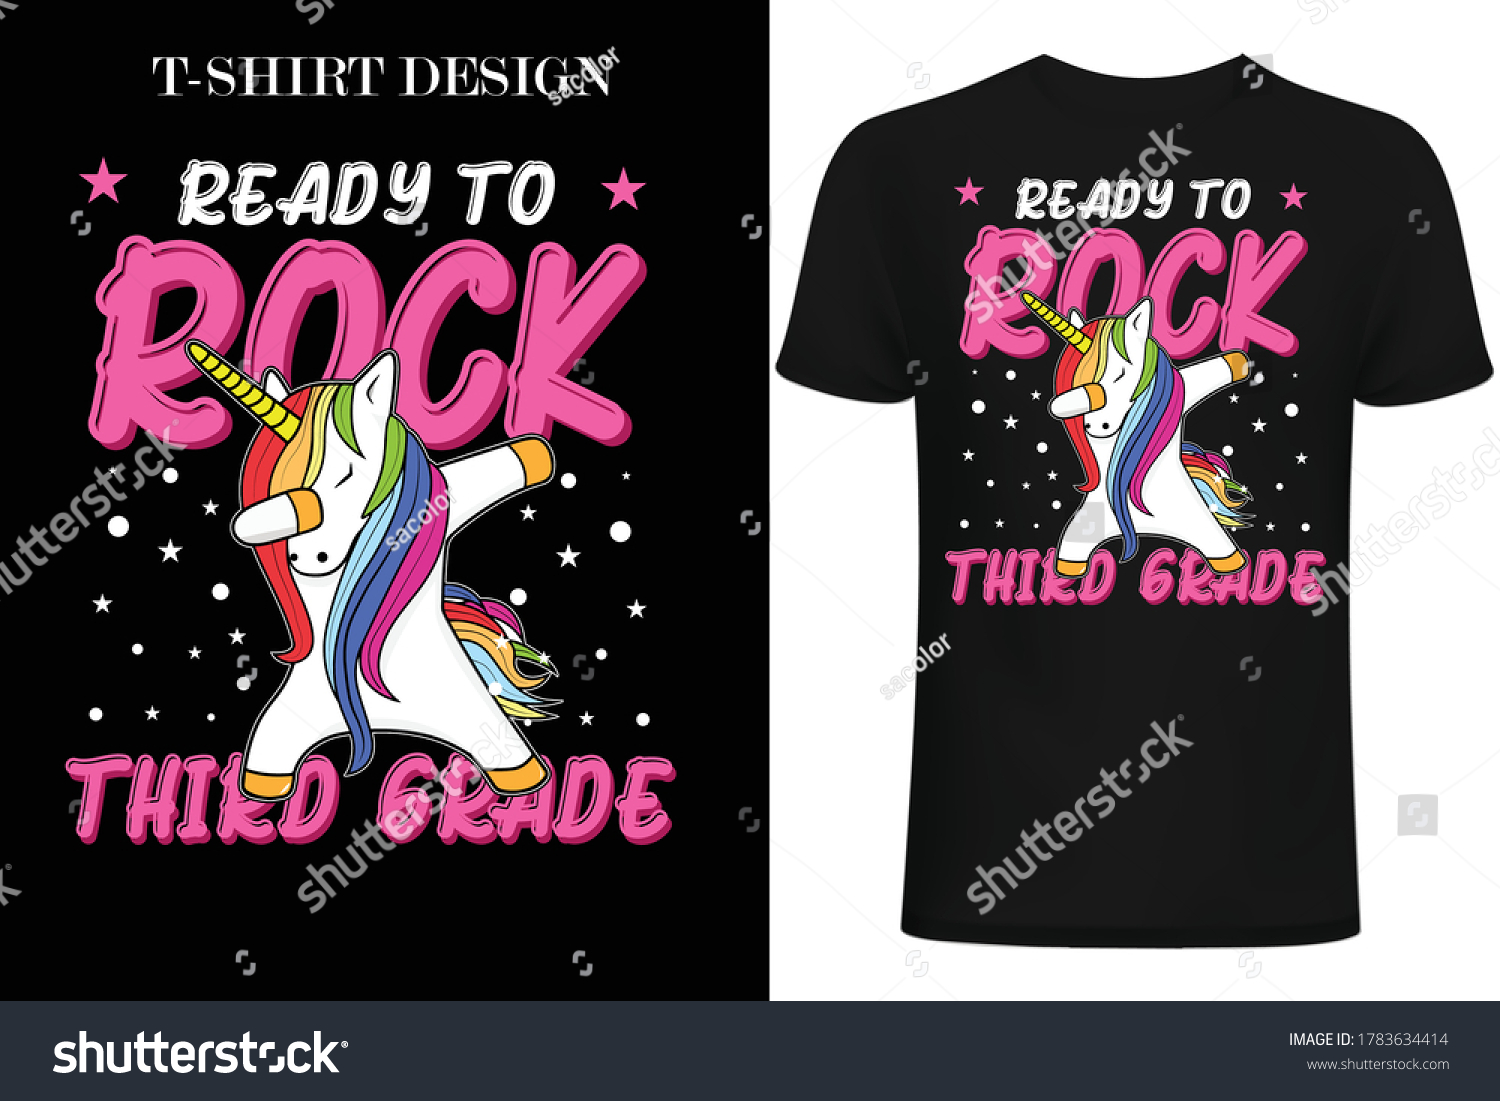 SVG of ready to rock third grade.Back to school t-shirt design. dabbing unicorn back to school t-shirt design. svg